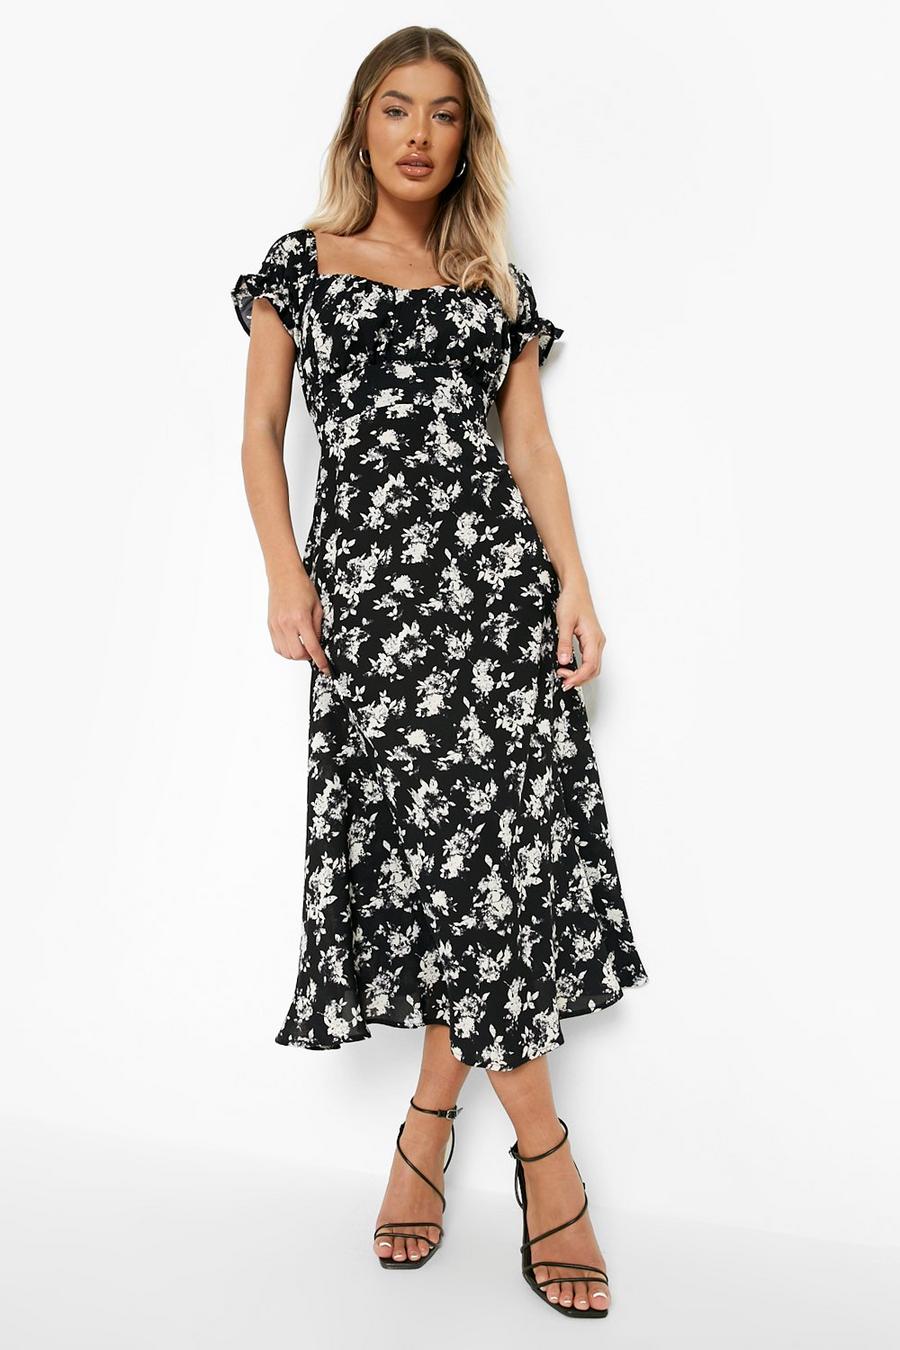 Black Floral Bardot Midaxi Dress